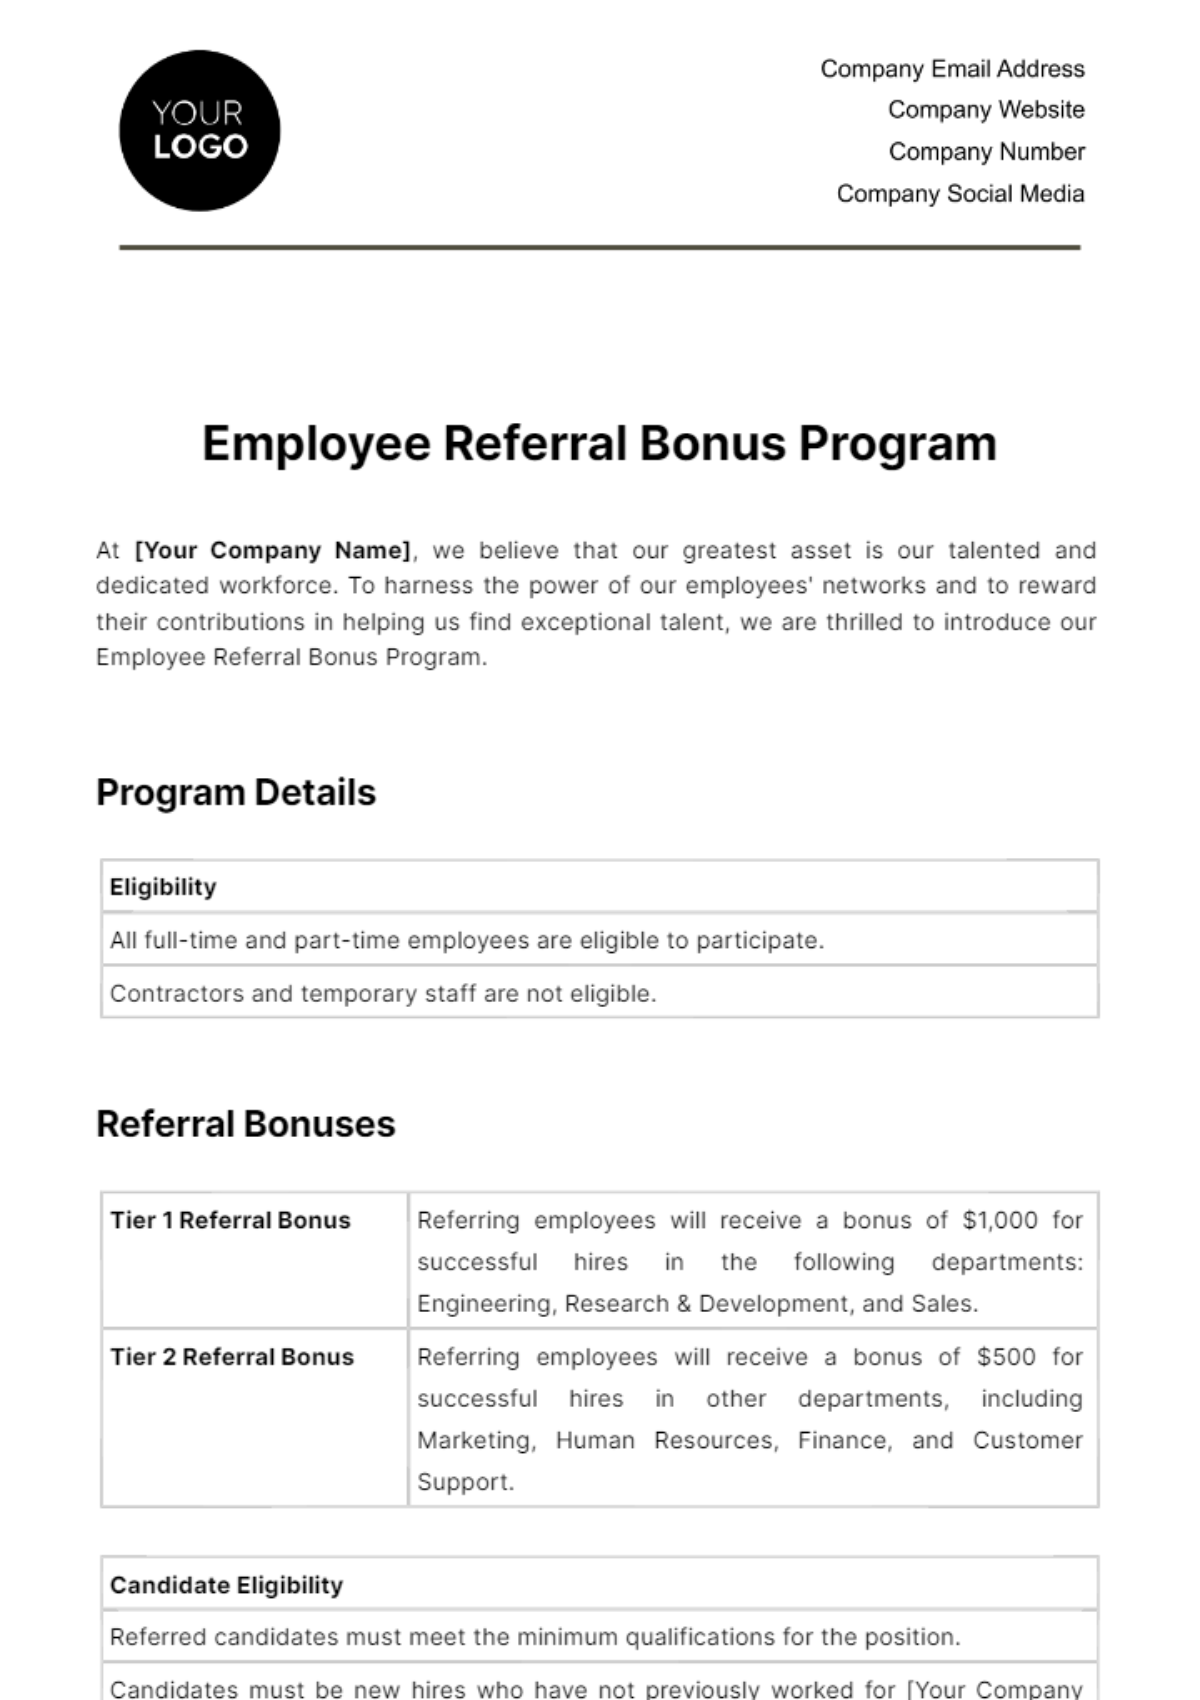 Employee Referral Bonus Program HR Template